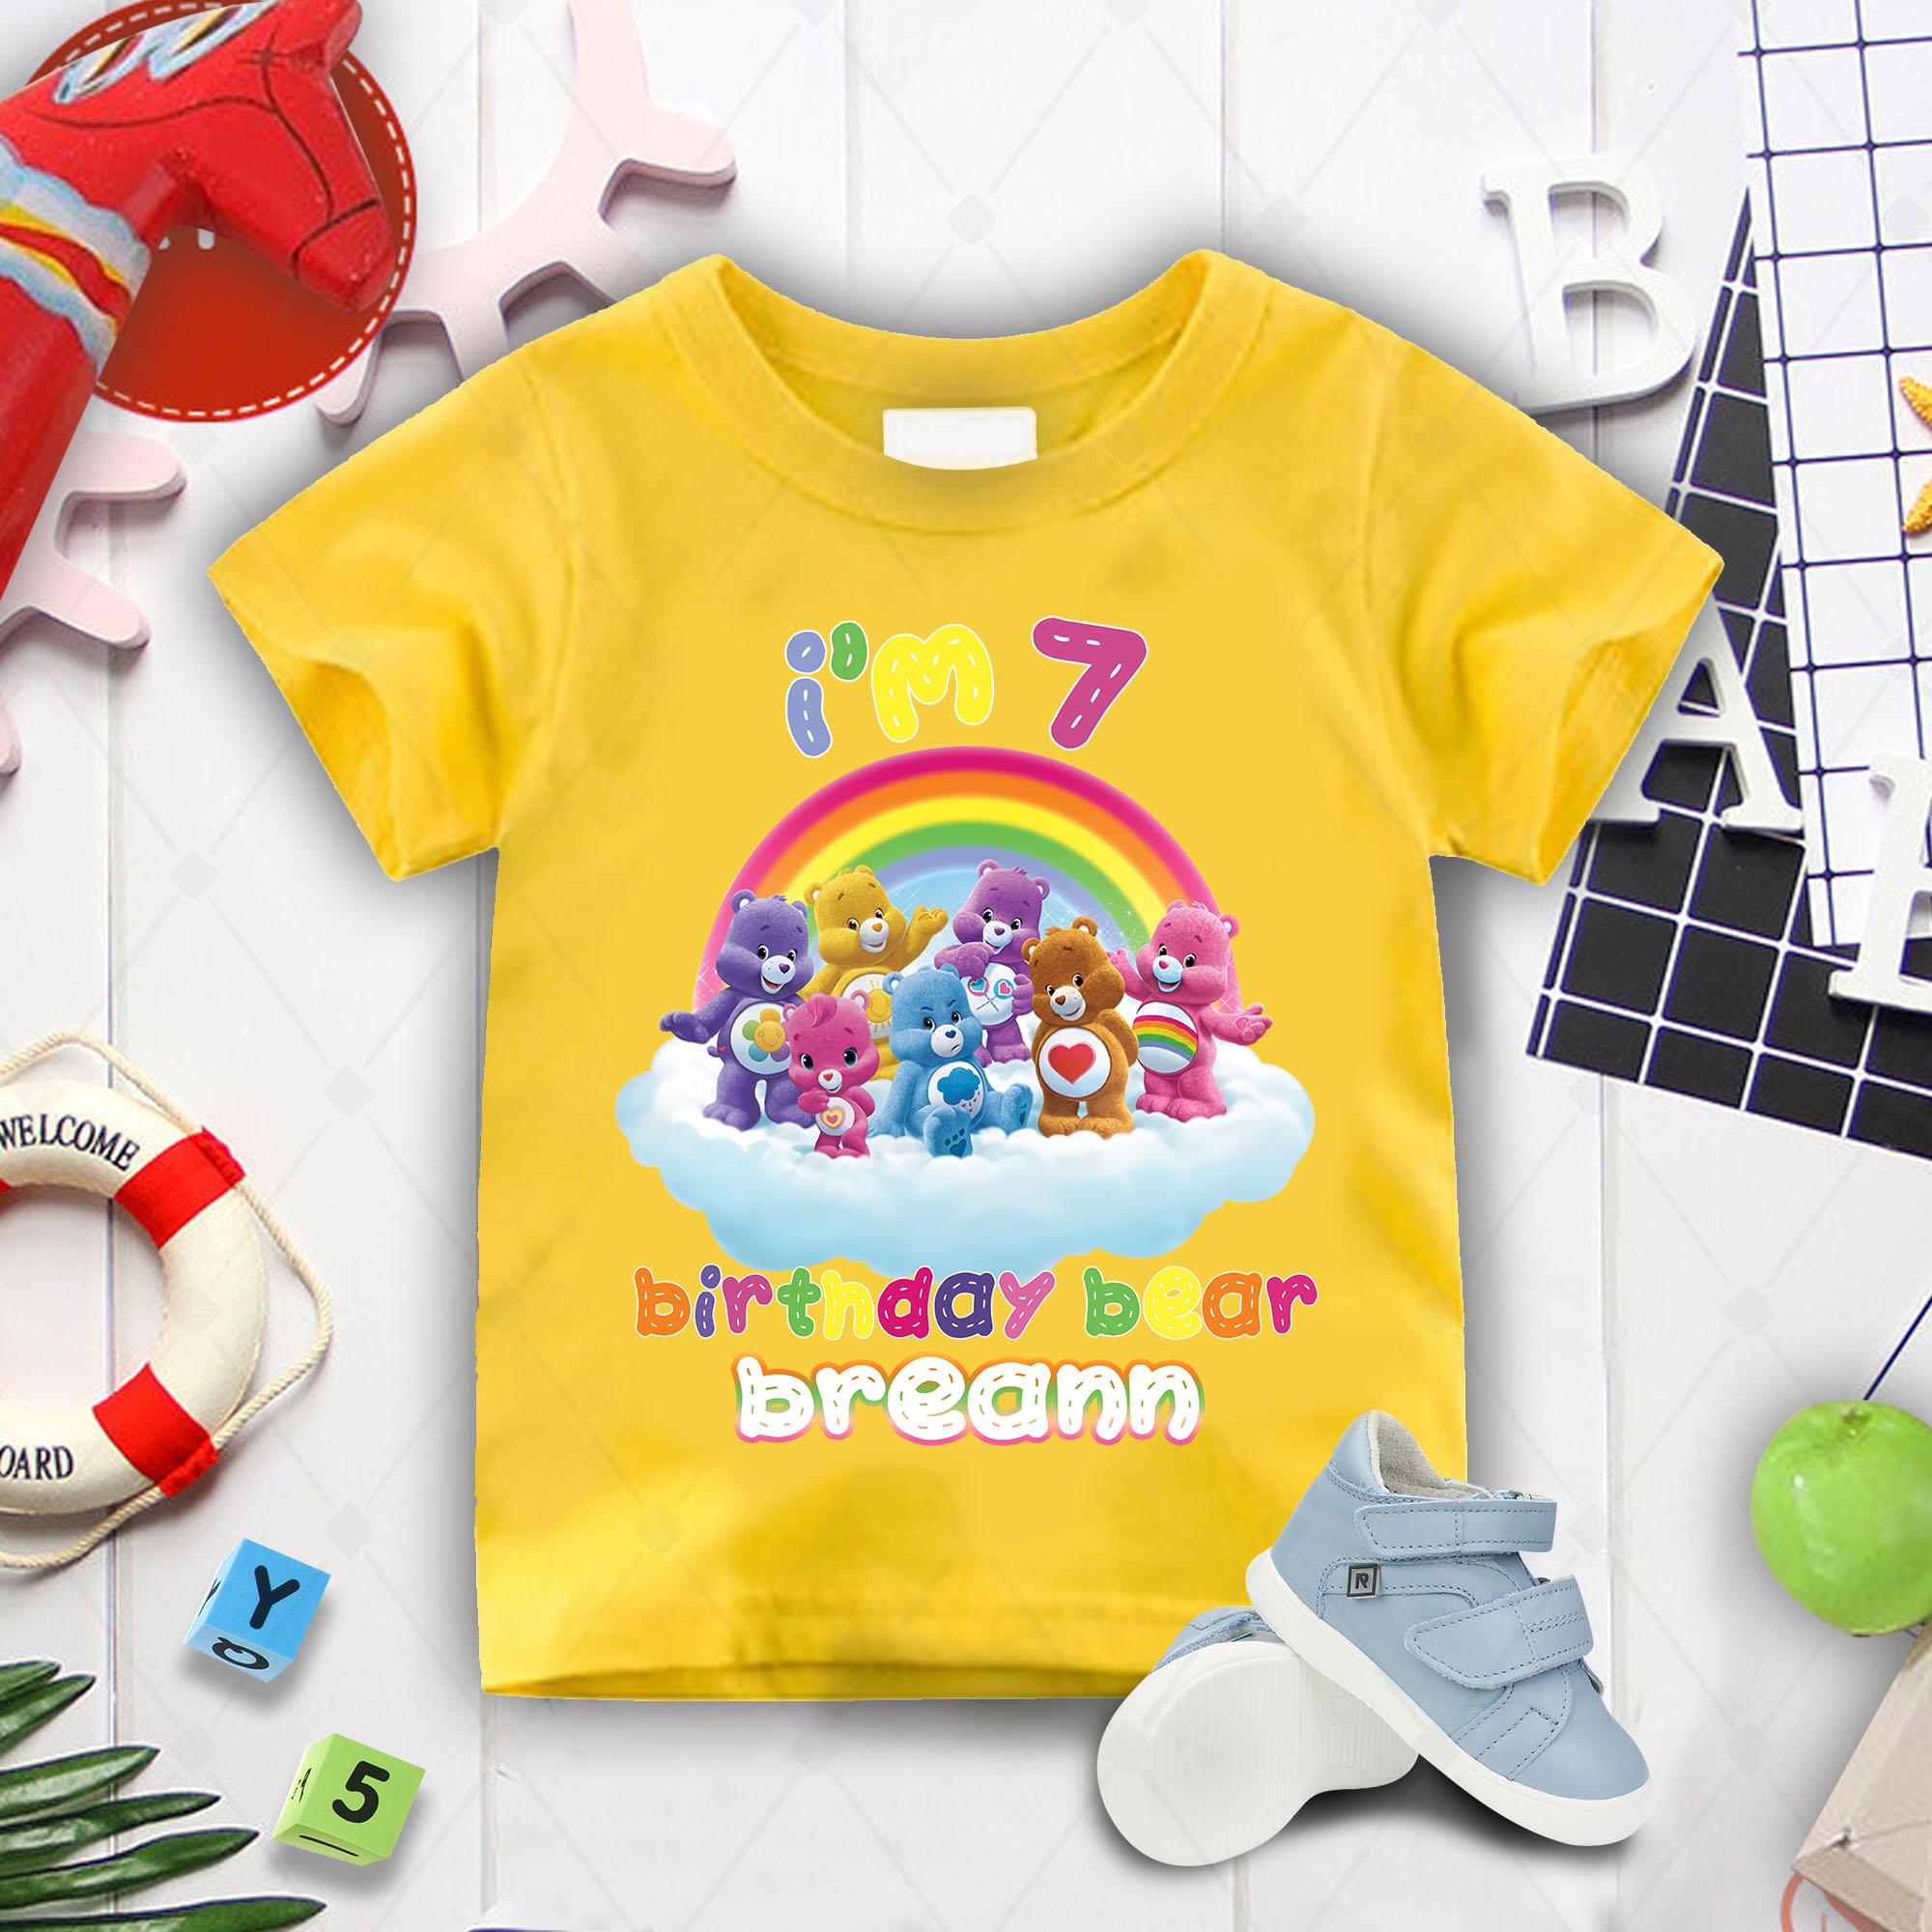 Care Bears Birthday Kids Shirt, Carebears Theme Party Shirt, Care Bears Family Matching Shirt, Custom Name And Age